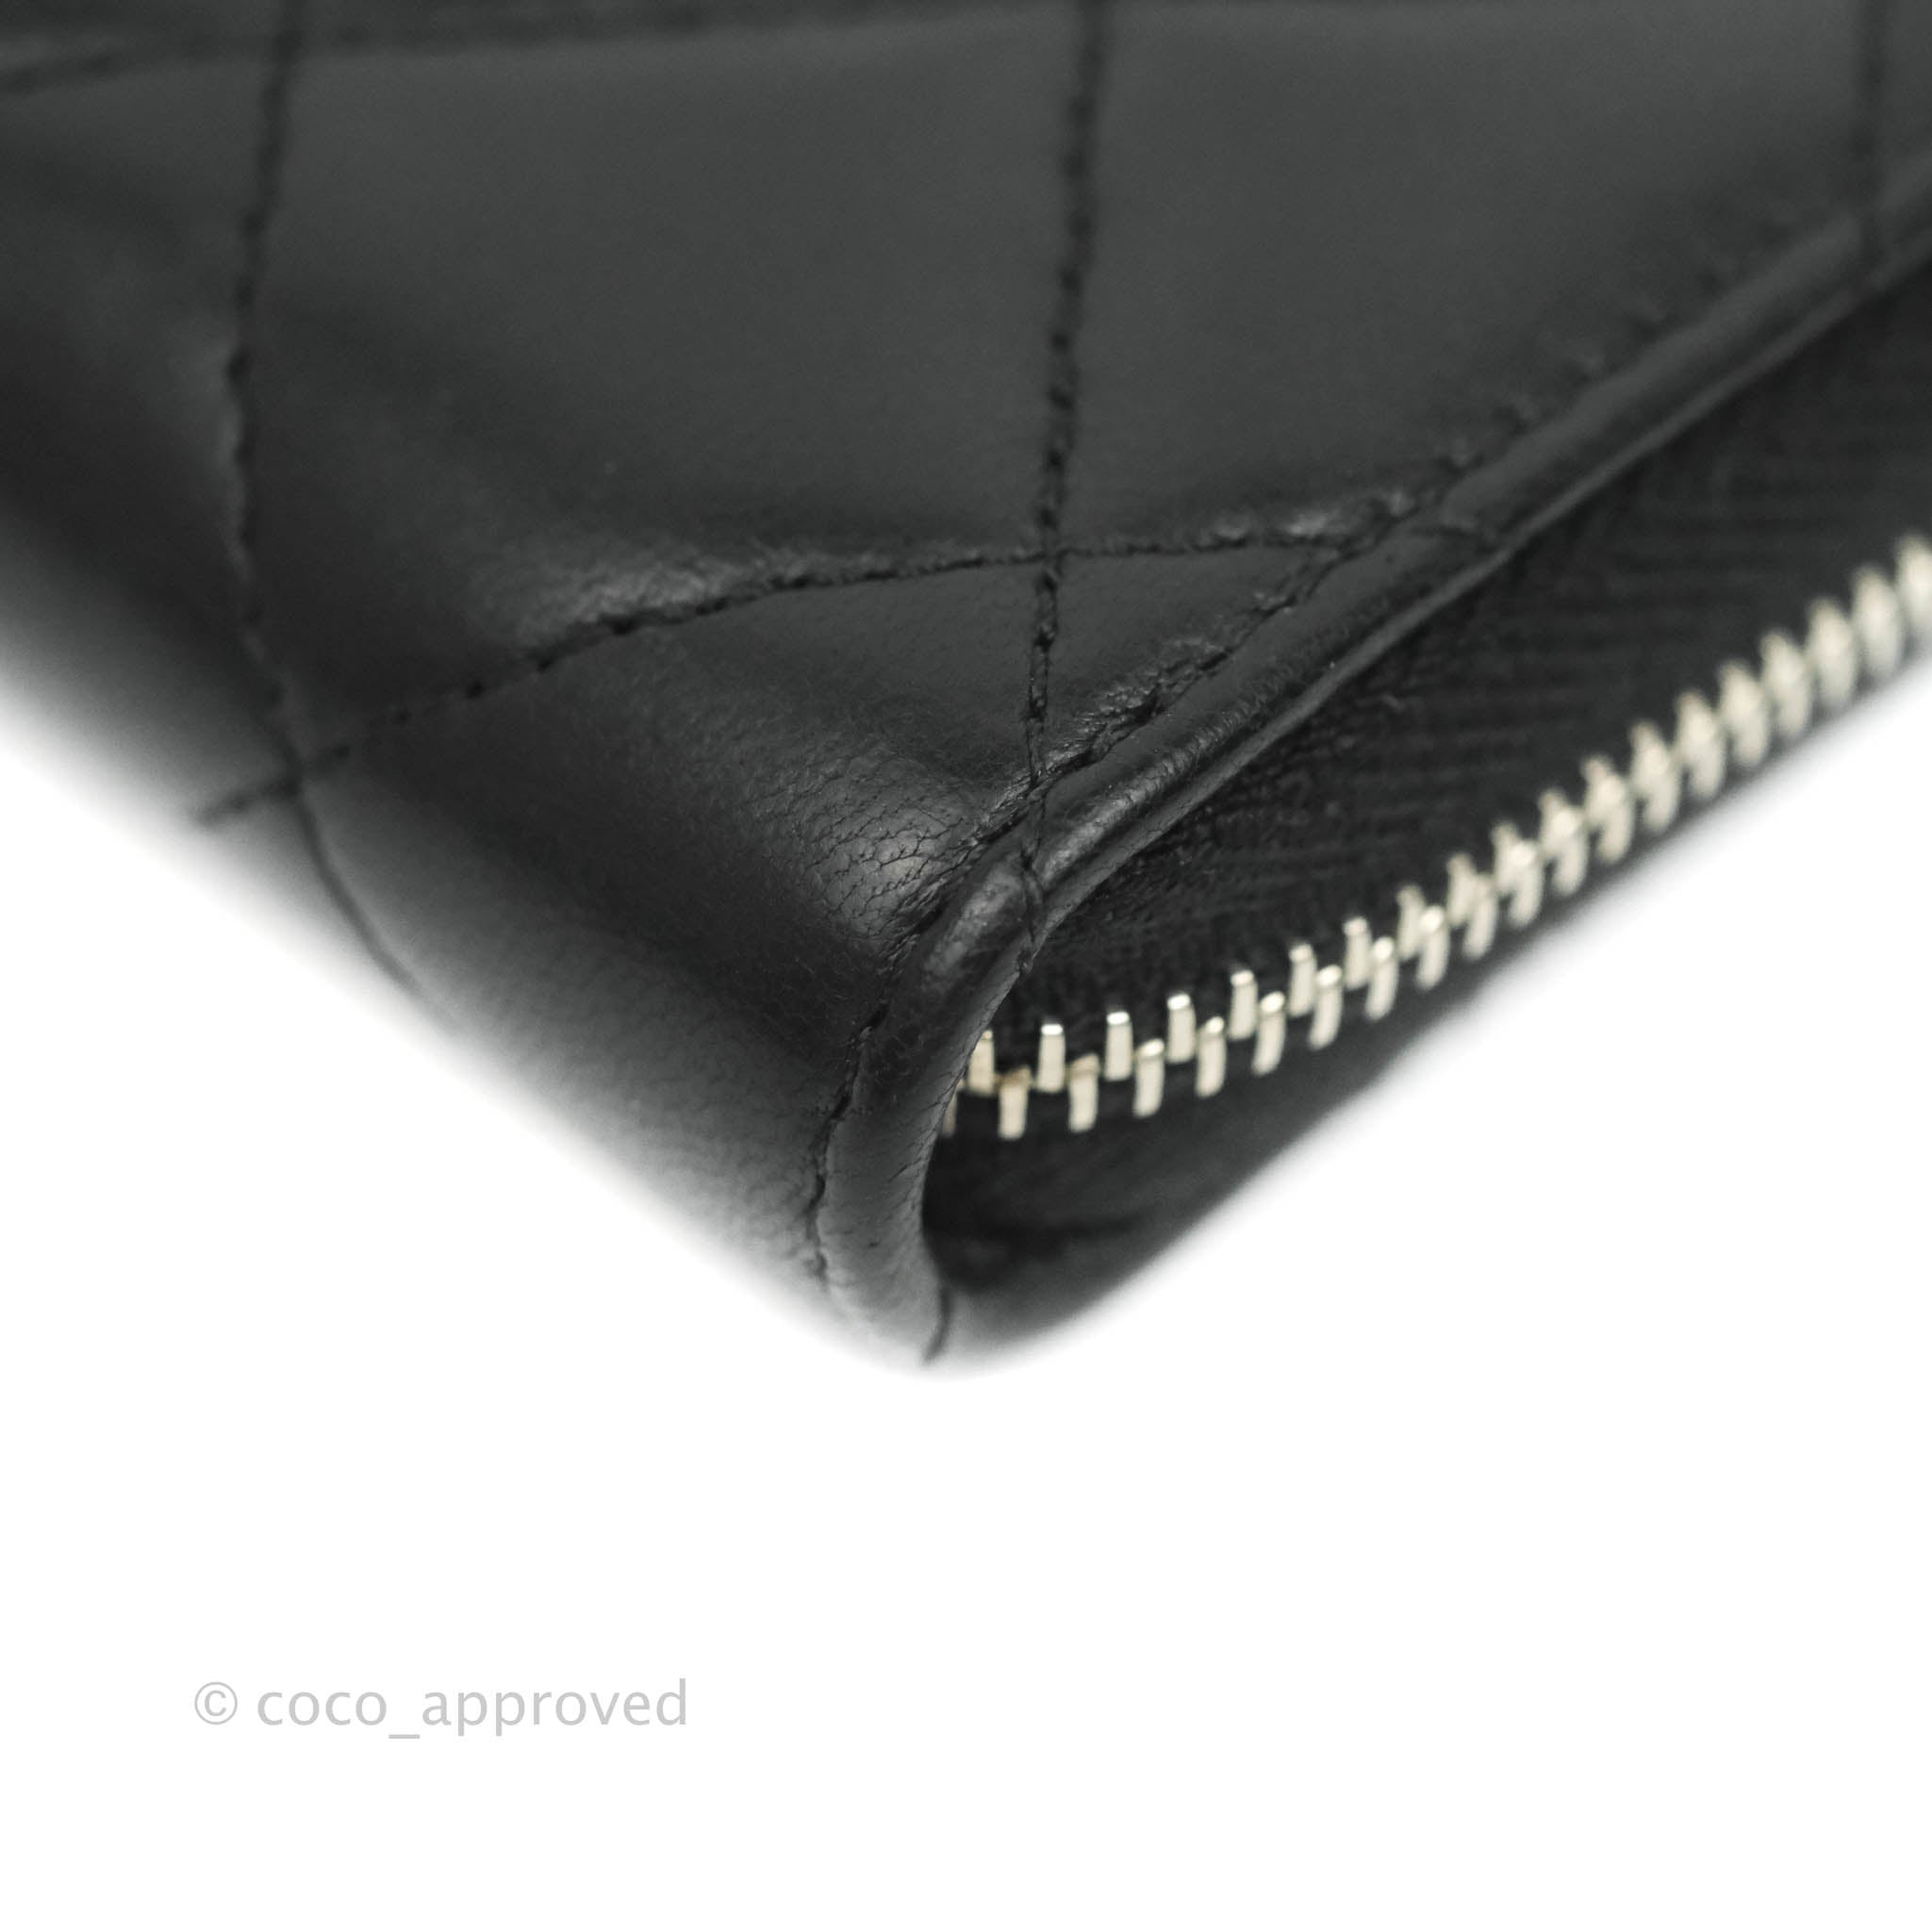 Zipped coin purse - Lambskin, resin & gold-tone metal, black — Fashion